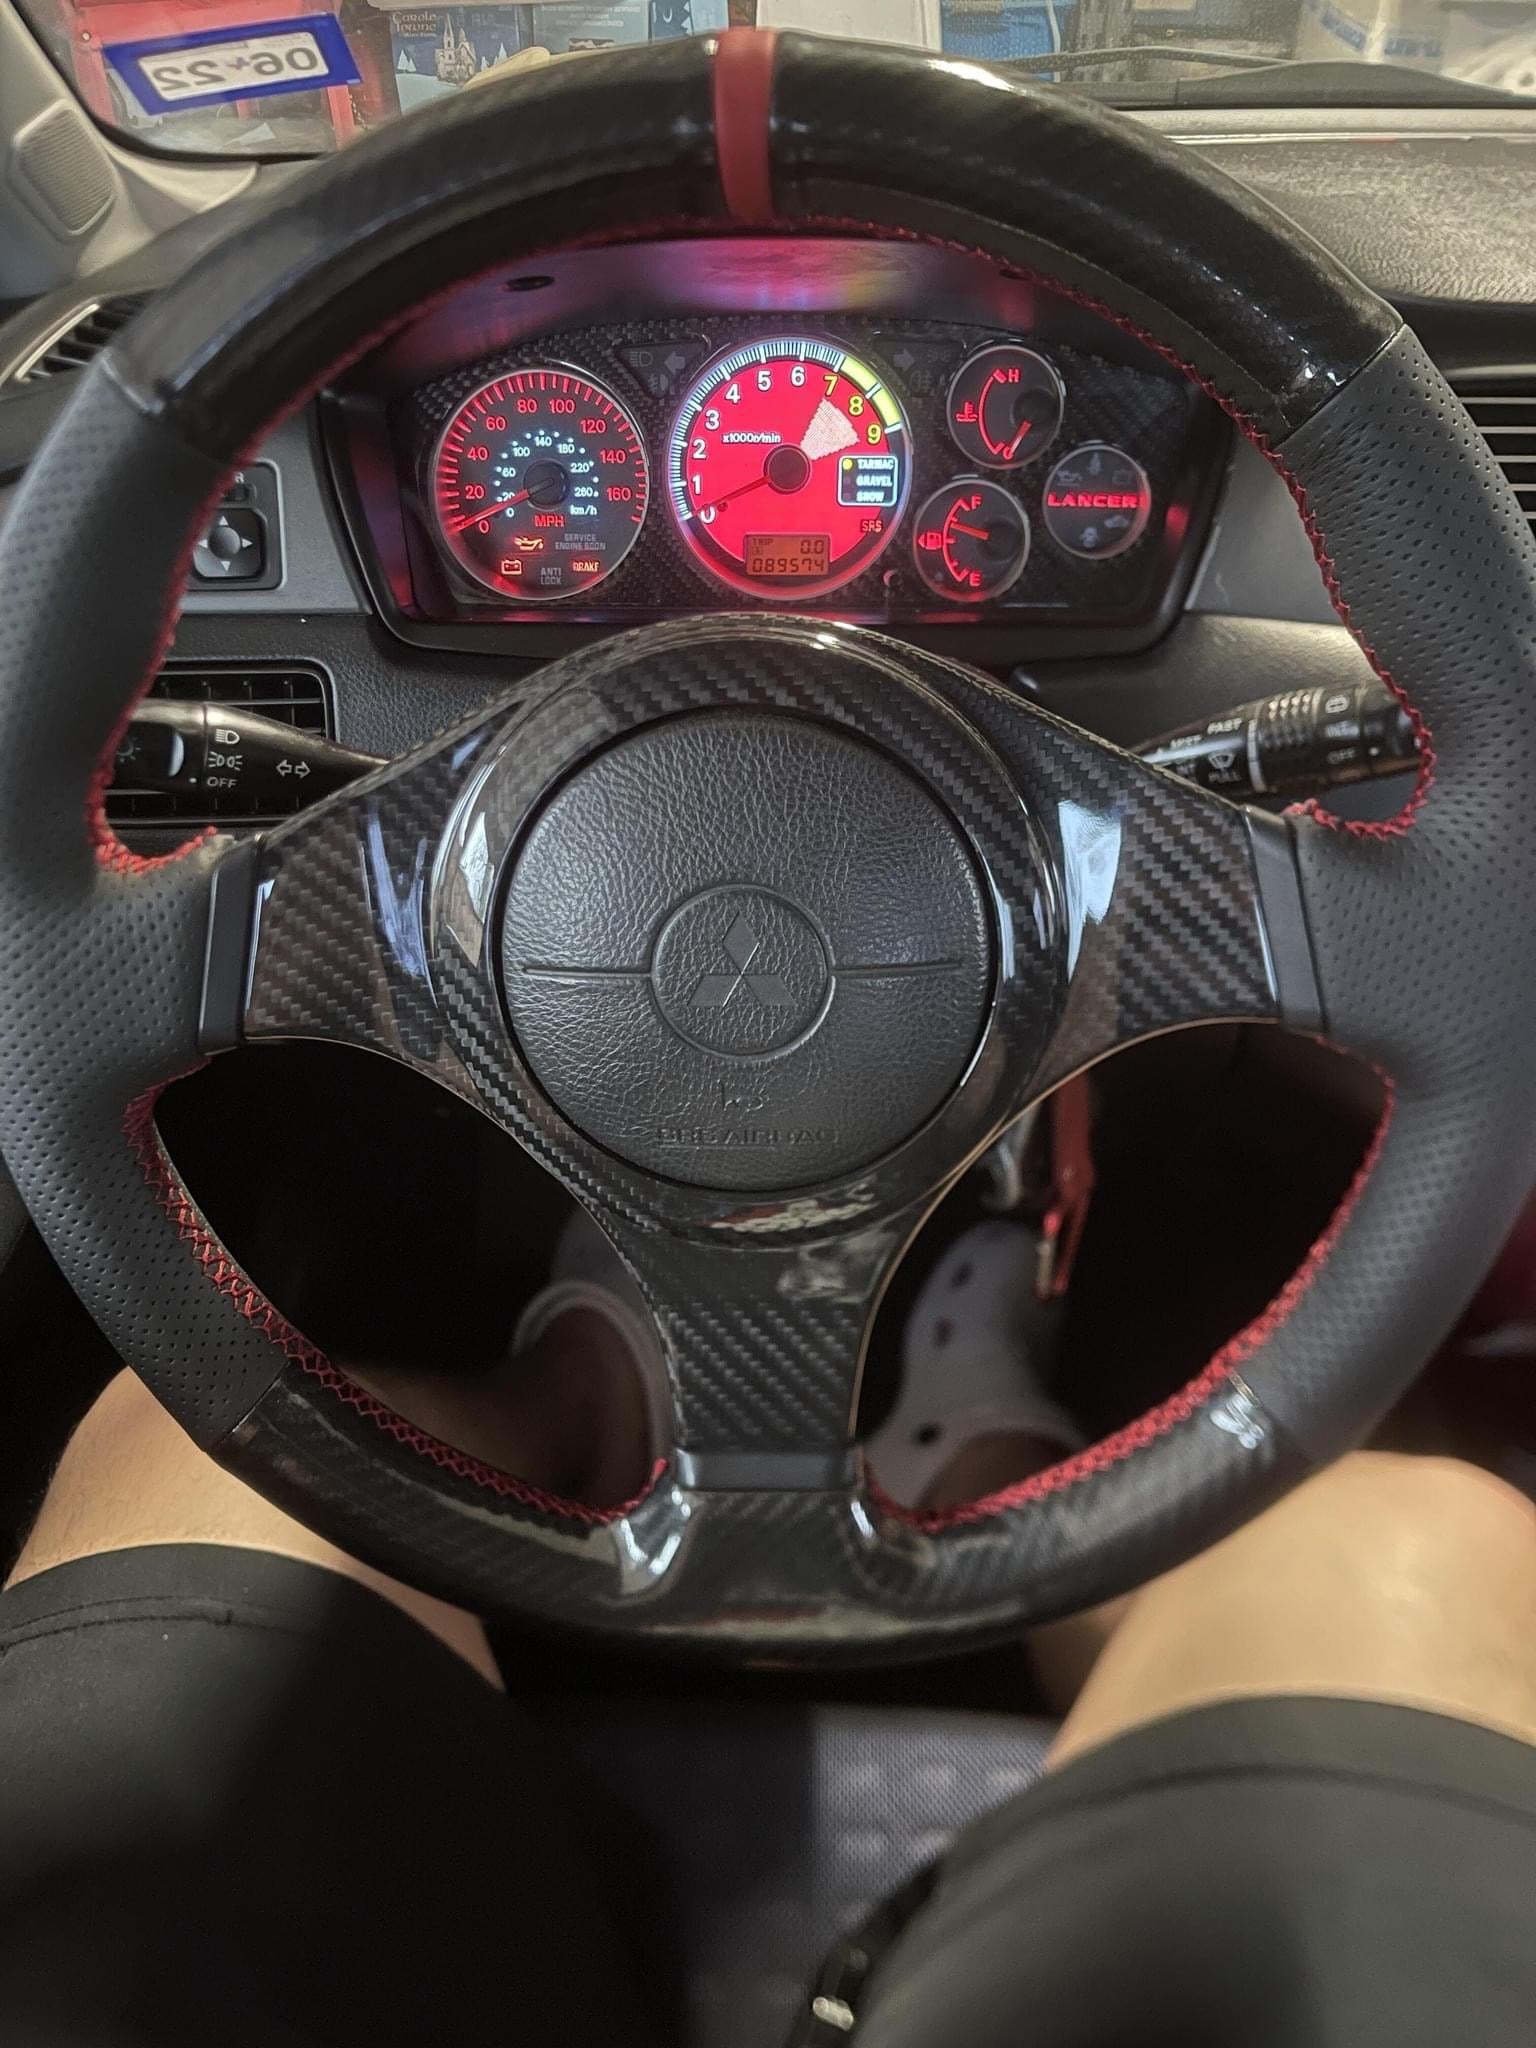 Rexpeed Dry Carbon Fiber Steering Wheel Cover (Evo 7/8/9)